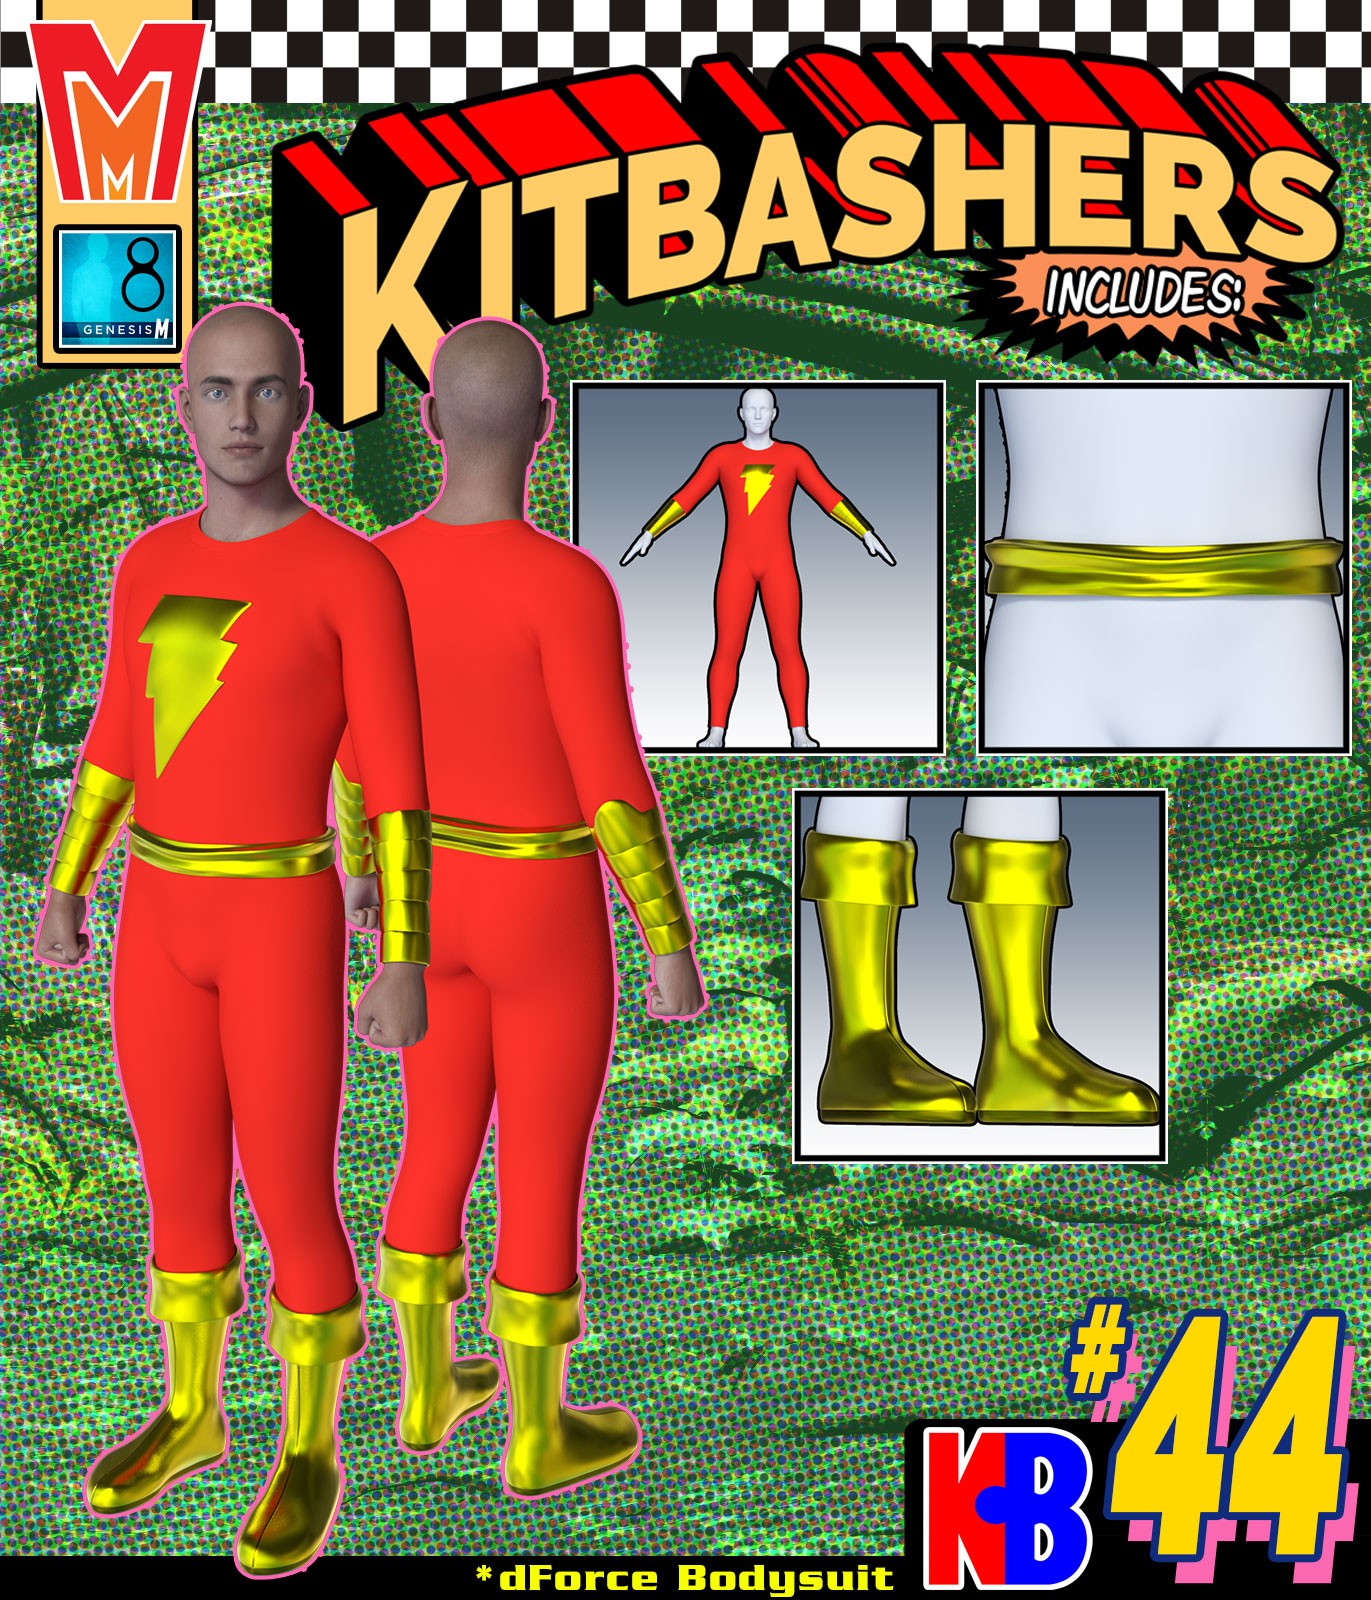 Kitbashers 044 MMG8M by: MightyMite, 3D Models by Daz 3D